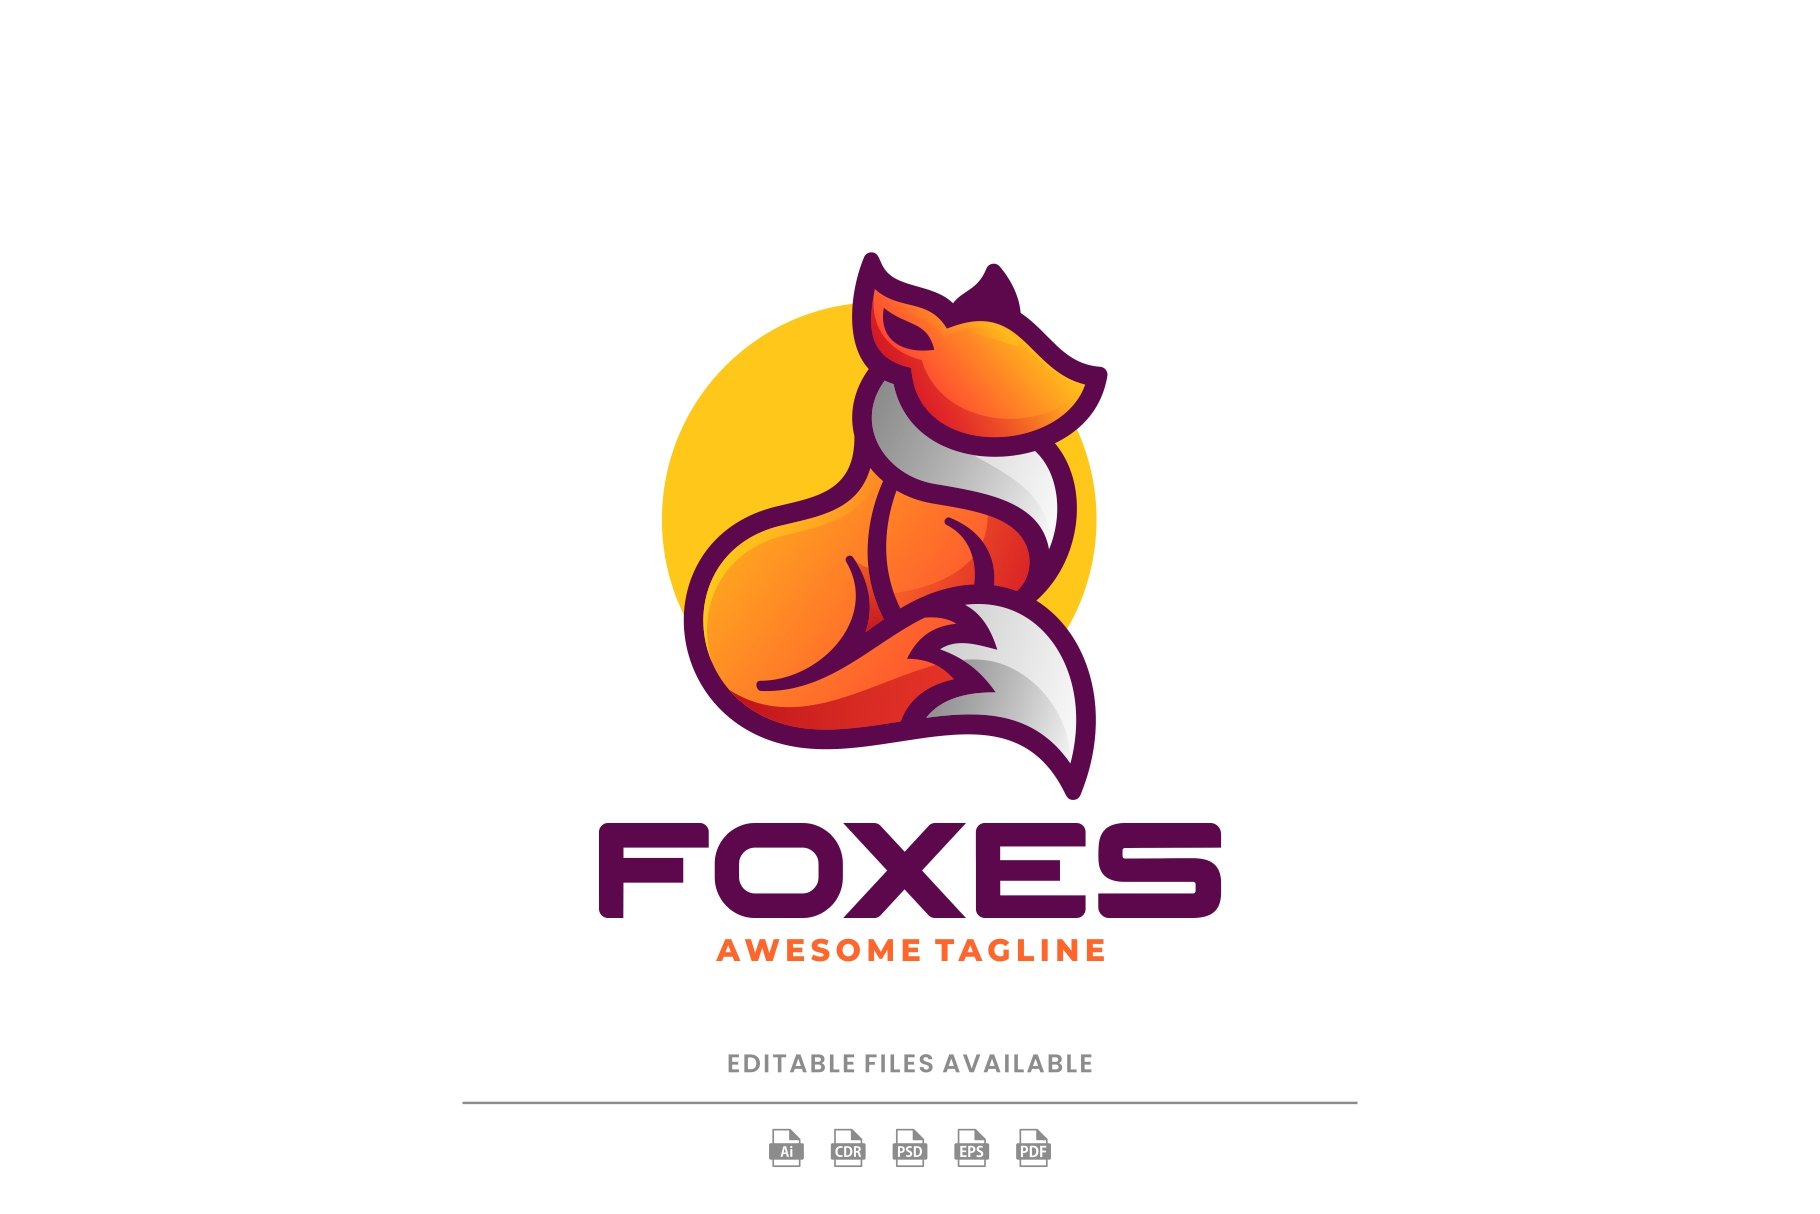 Fox Simple Mascot Logo cover image.